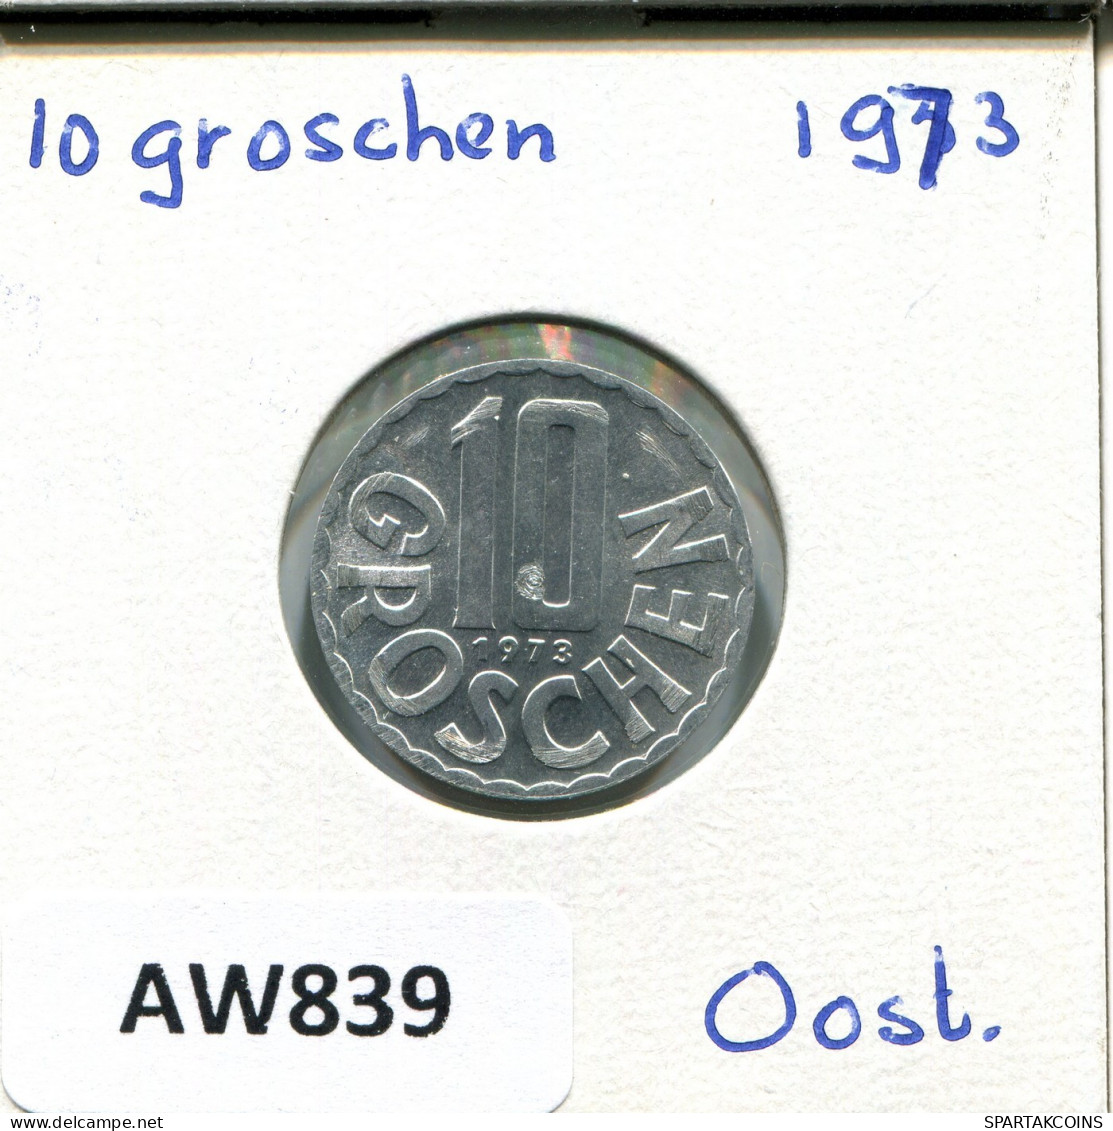 10 GROSCHEN 1973 AUSTRIA Coin #AW839.U.A - Autriche